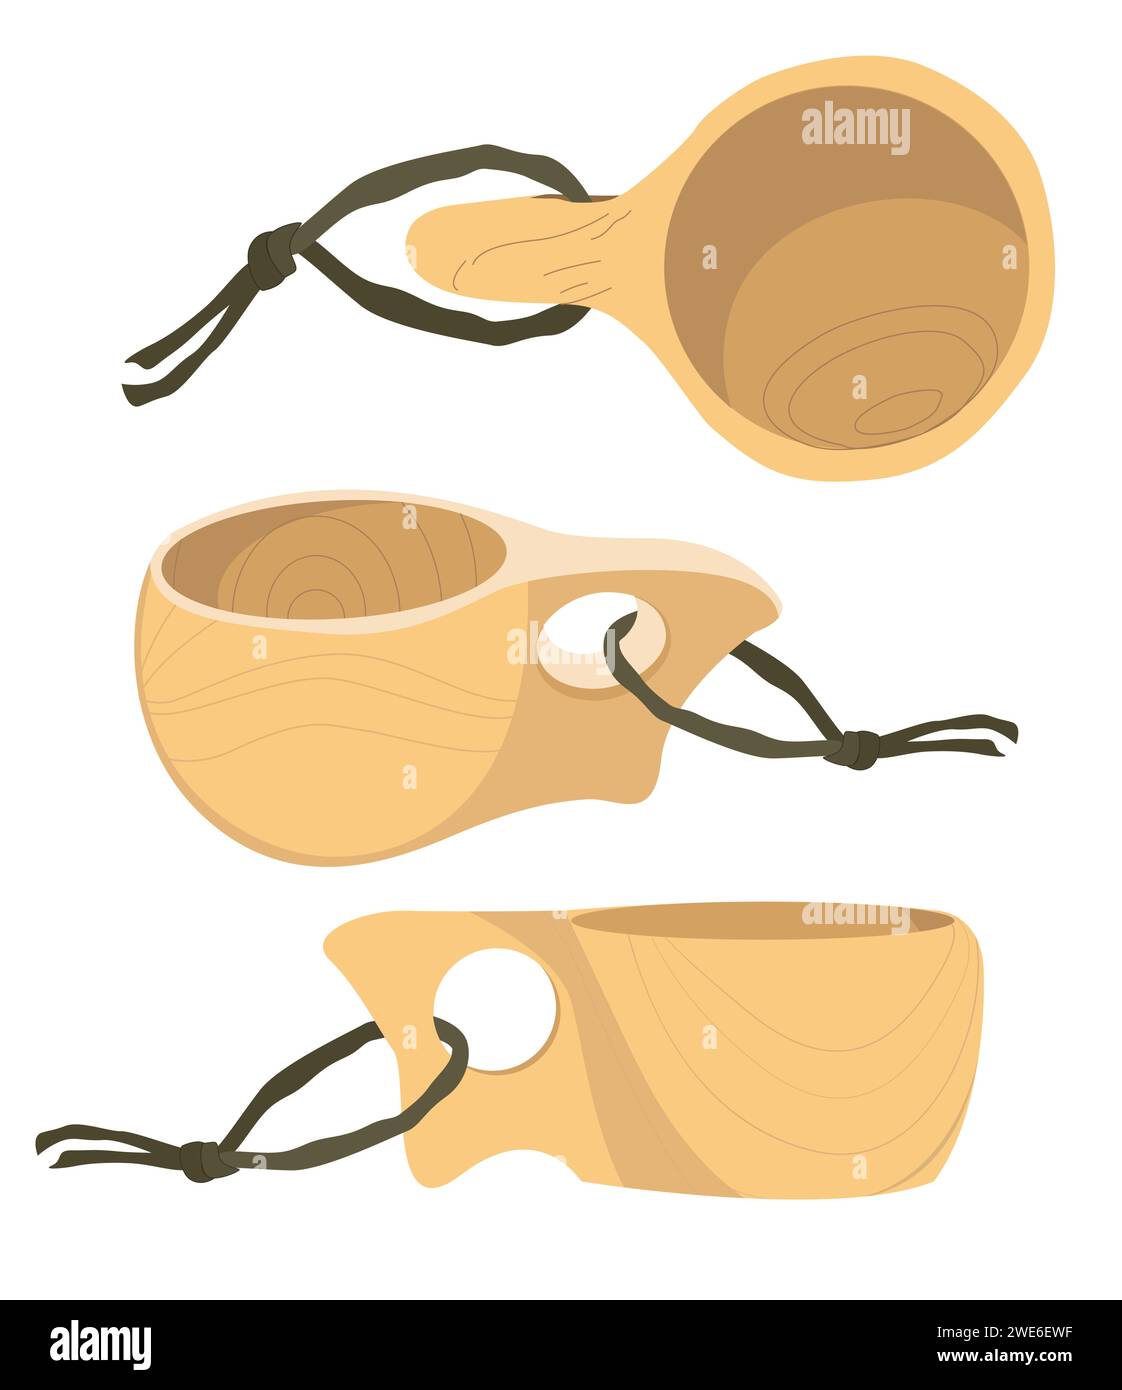 Kuksa. Wooden handmade mug in brutal style traditional in Finland and bushcraft community. Vector illustration Stock Vector